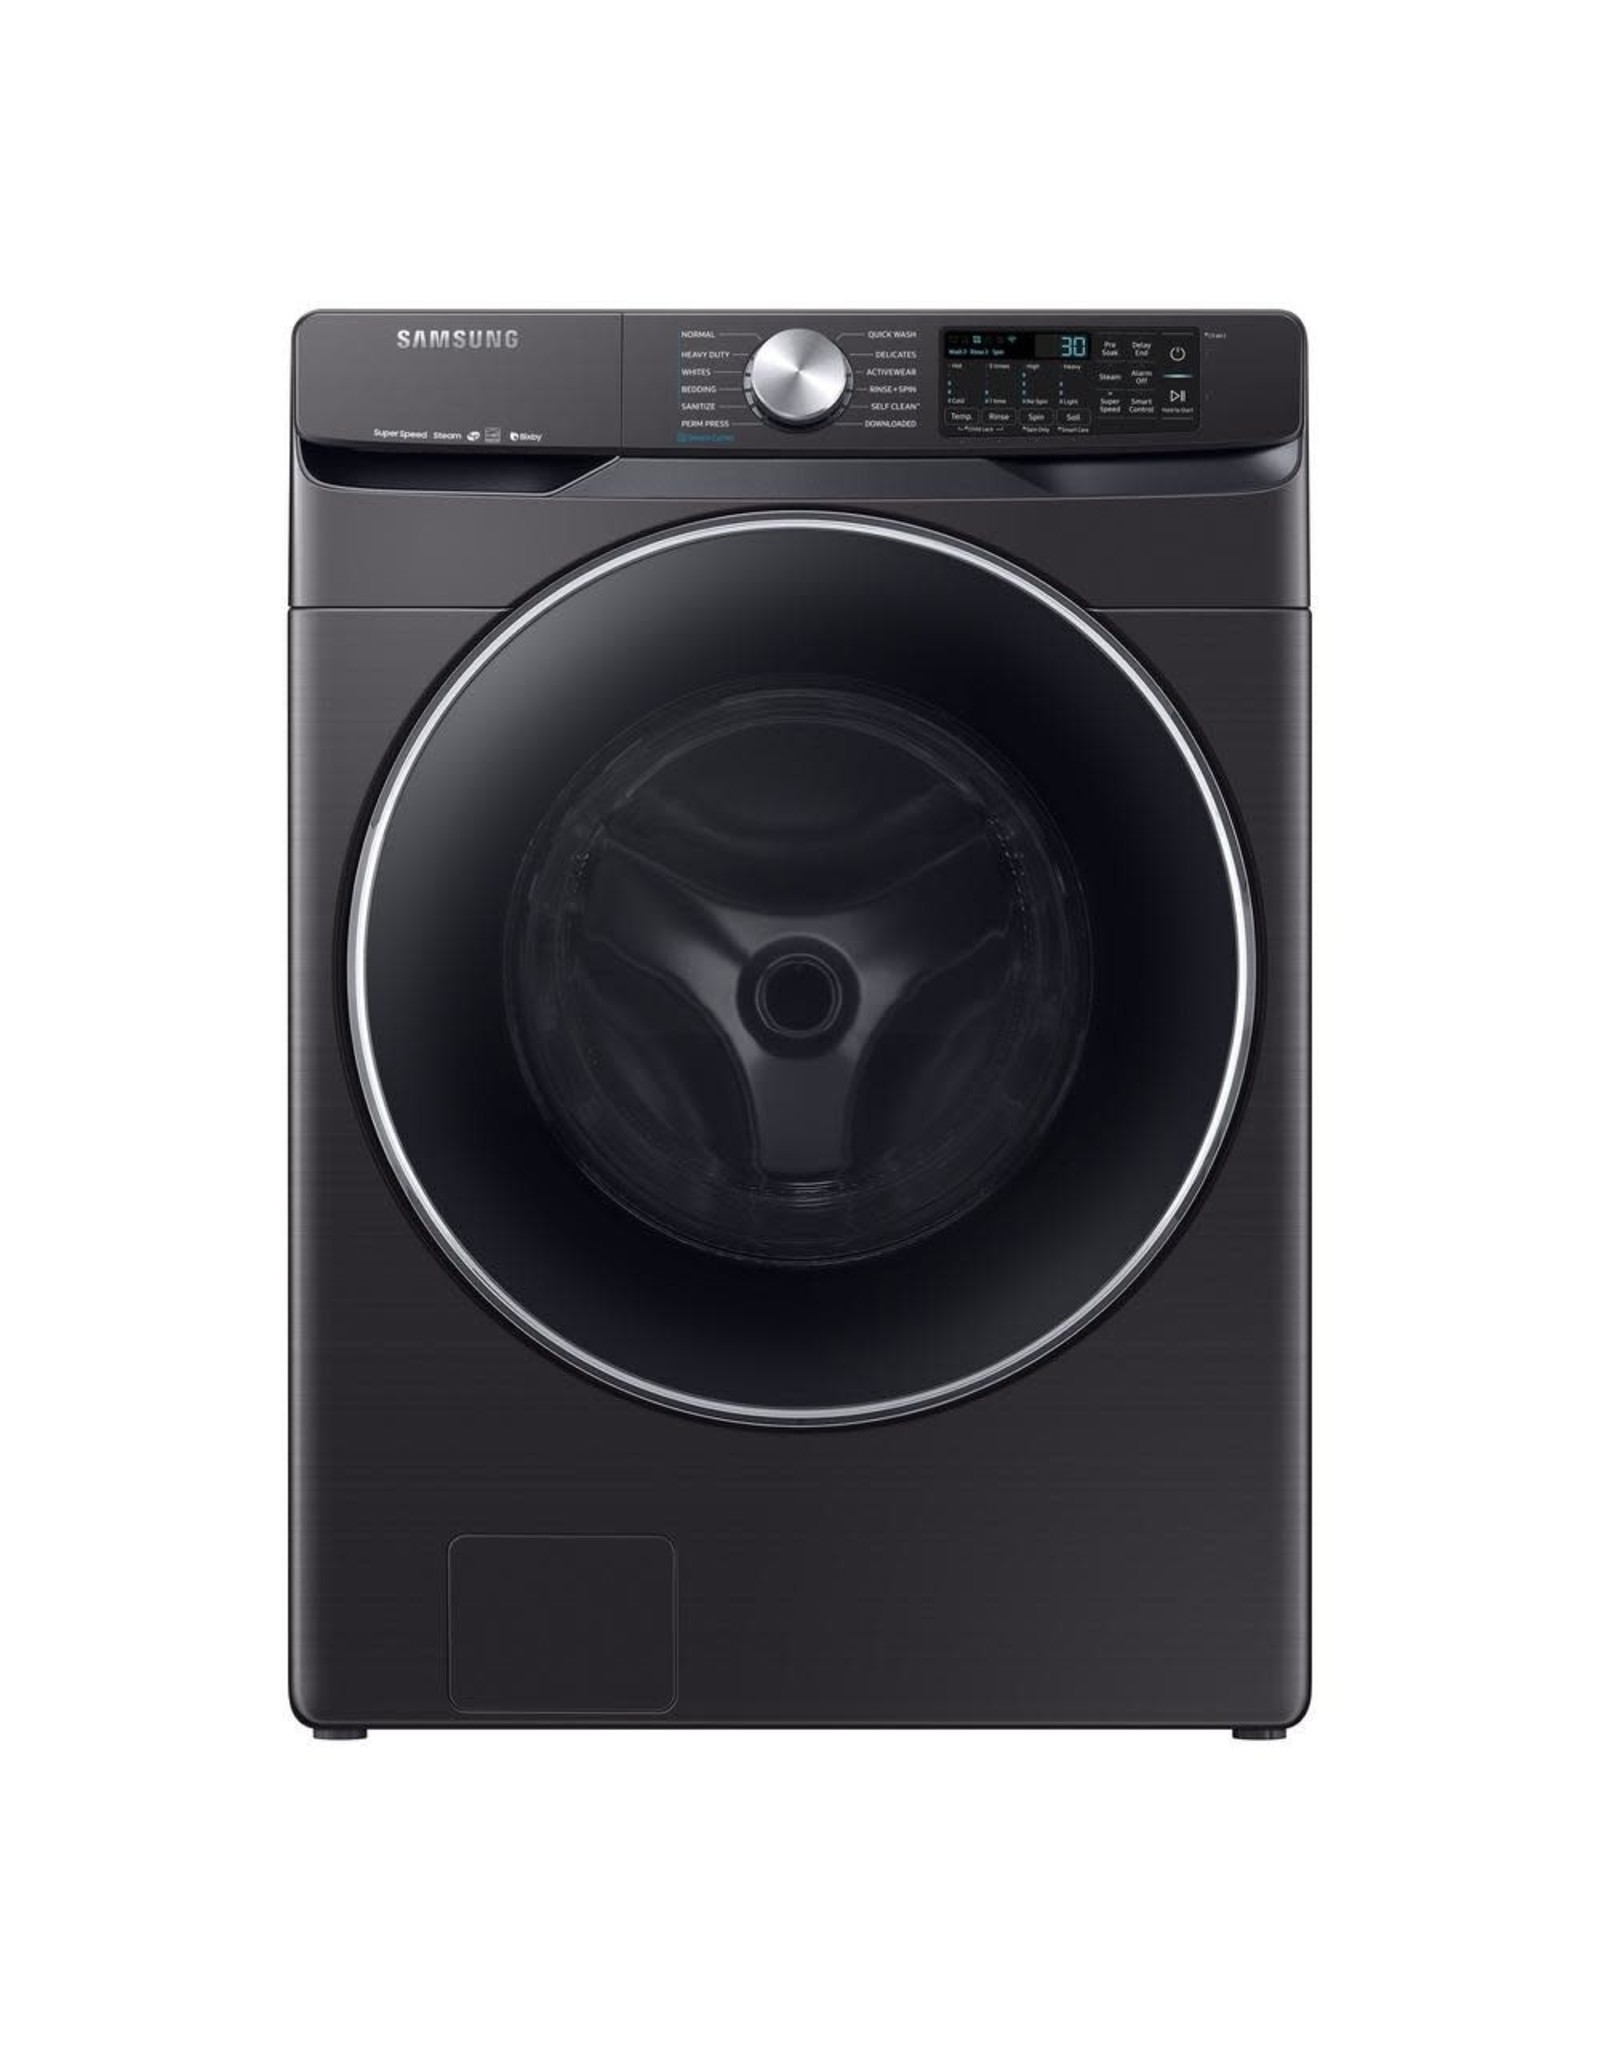 DVE45R6300V 7.5 cu. ft. Fingerprint Resistant Black Stainless Electric Dryer with Steam Sanitize+, ENERGY STAR